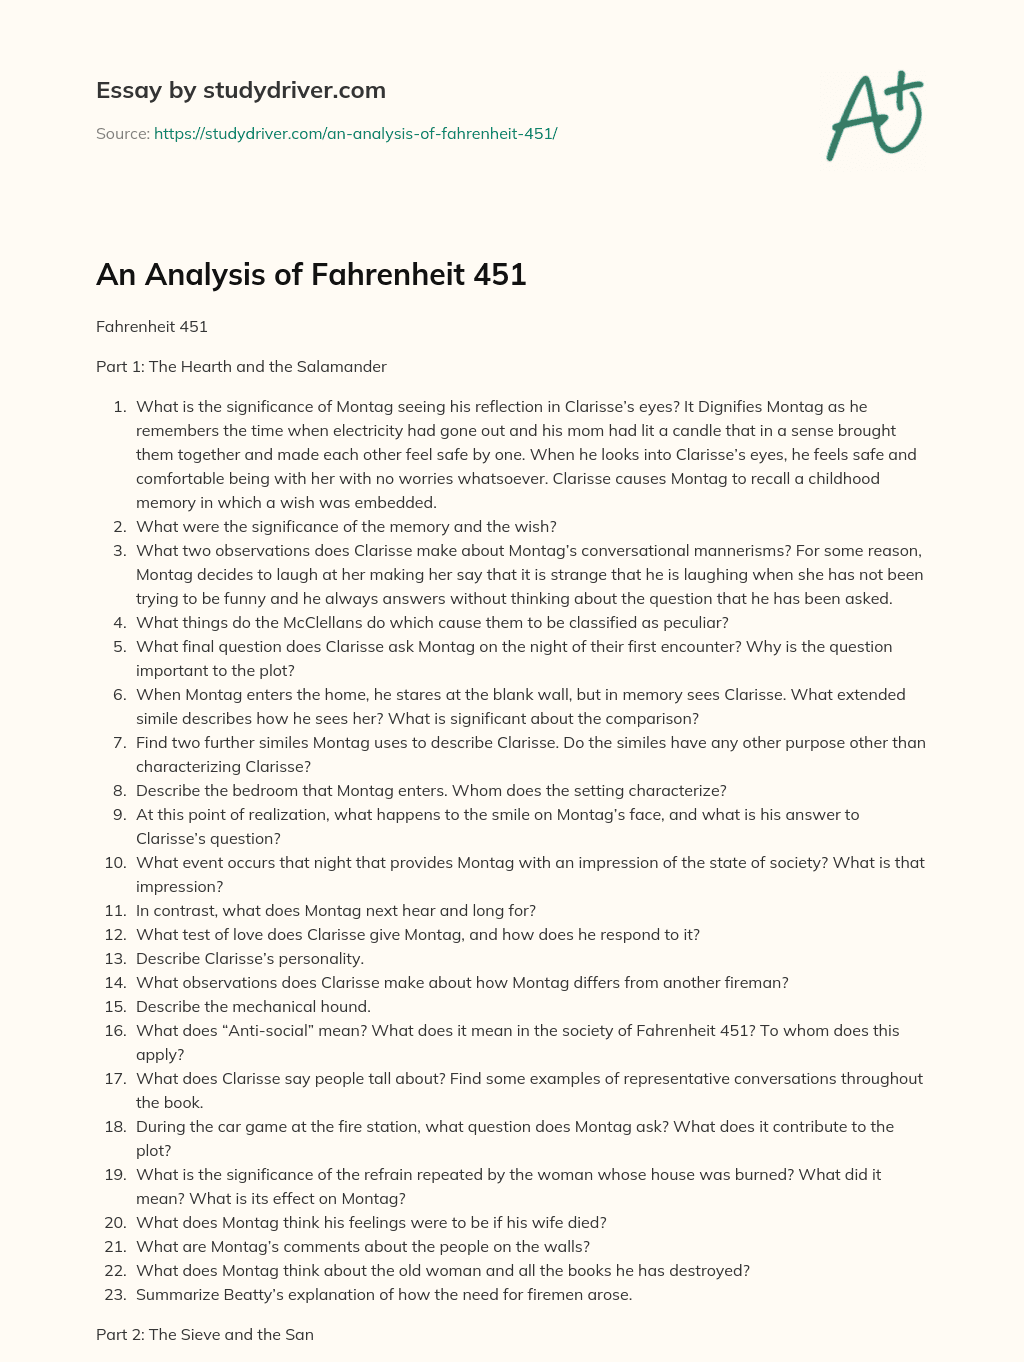 An Analysis of Fahrenheit 451 essay